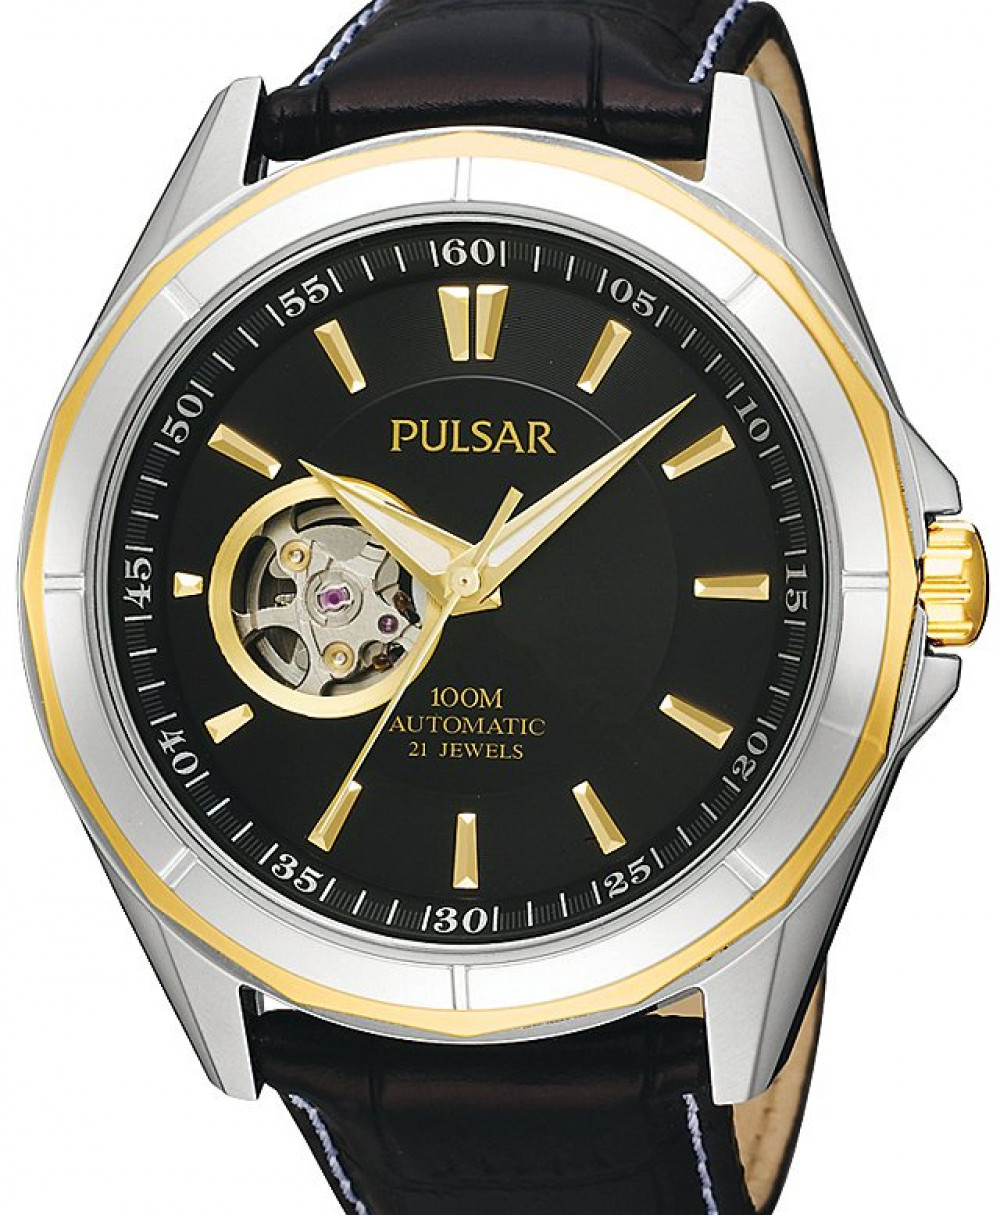 Zegarek firmy Pulsar, model Automatik